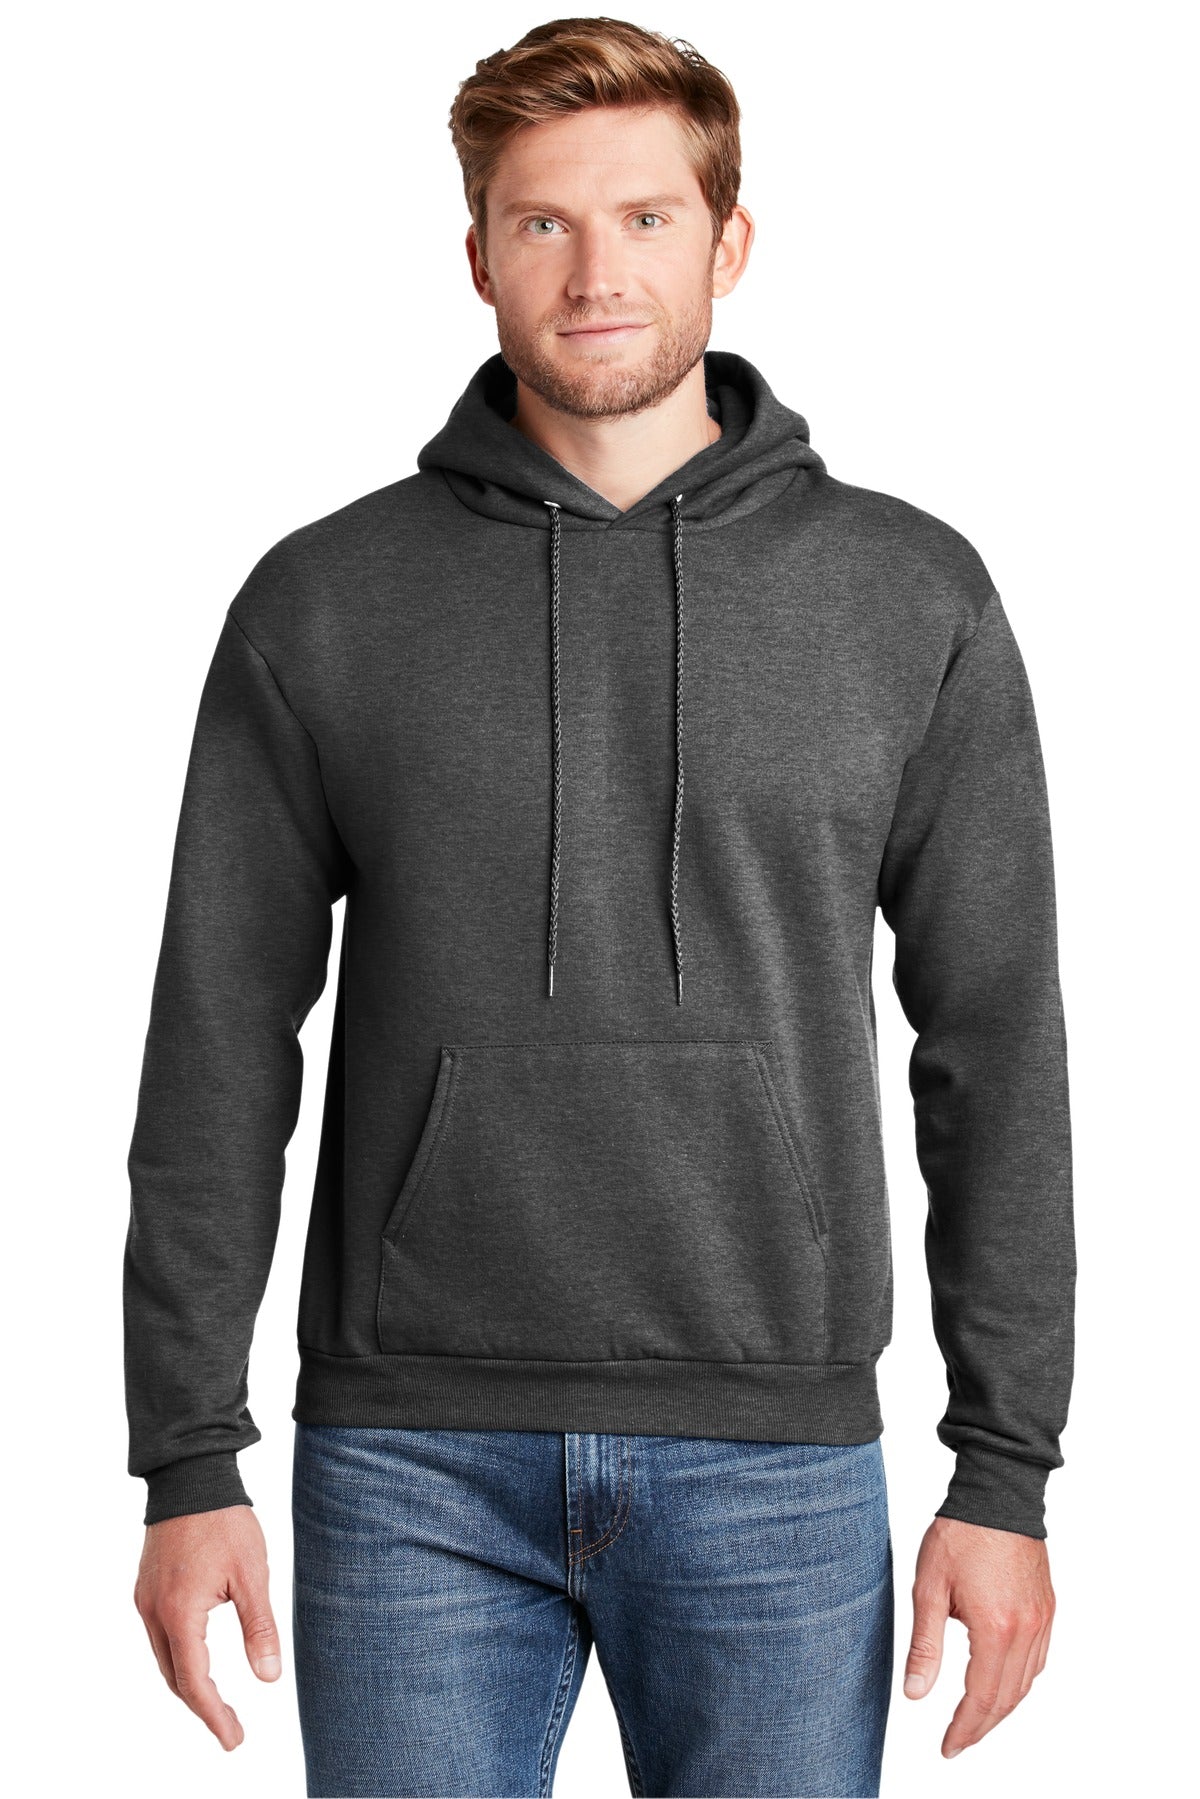 Hanes - Ecosmart® Hooded Sweatshirt - P170 – Shirts23 - Premium